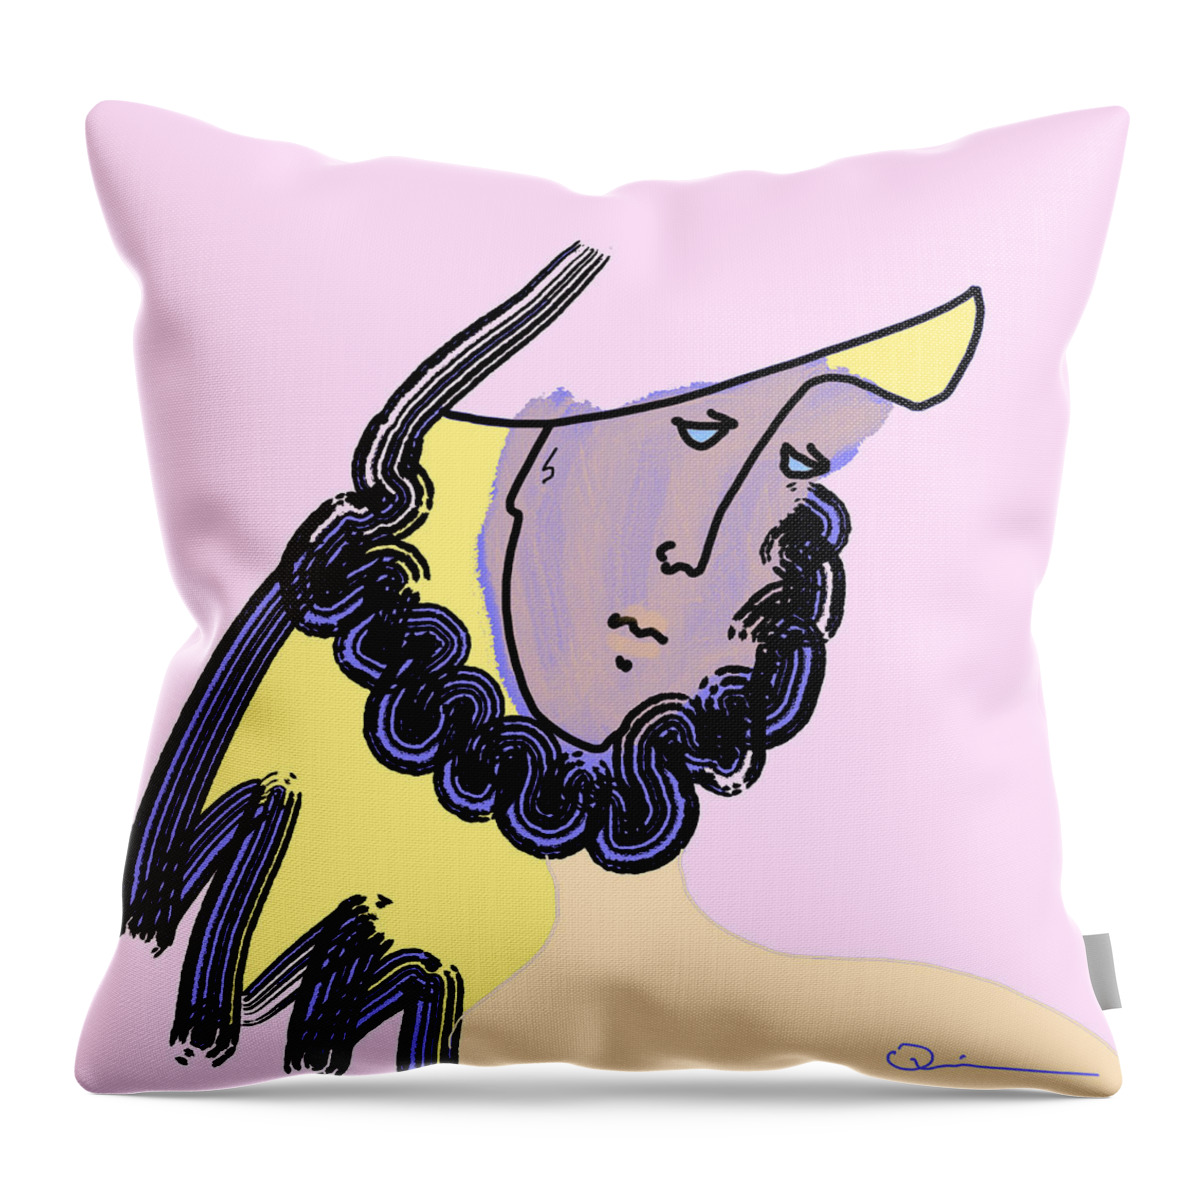 Quiros Throw Pillow featuring the digital art Ruffle by Jeffrey Quiros